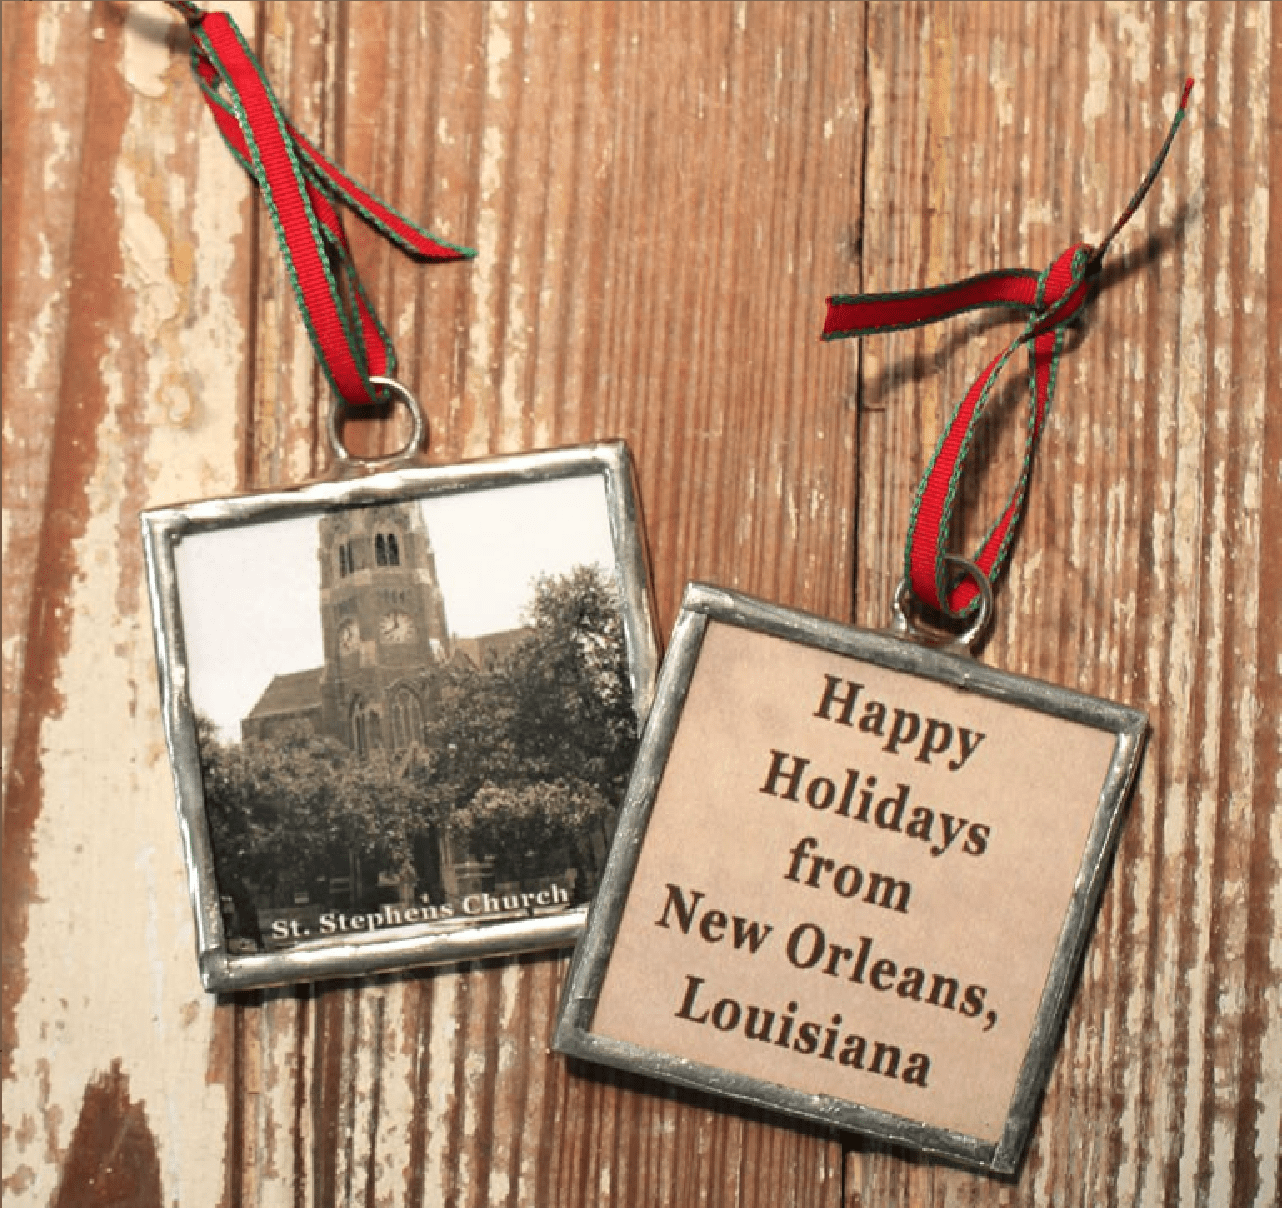 Heather Elizabeth - Heather Elizabeth Designs New Orleans Churches Christmas Ornaments - Little Miss Muffin Children & Home